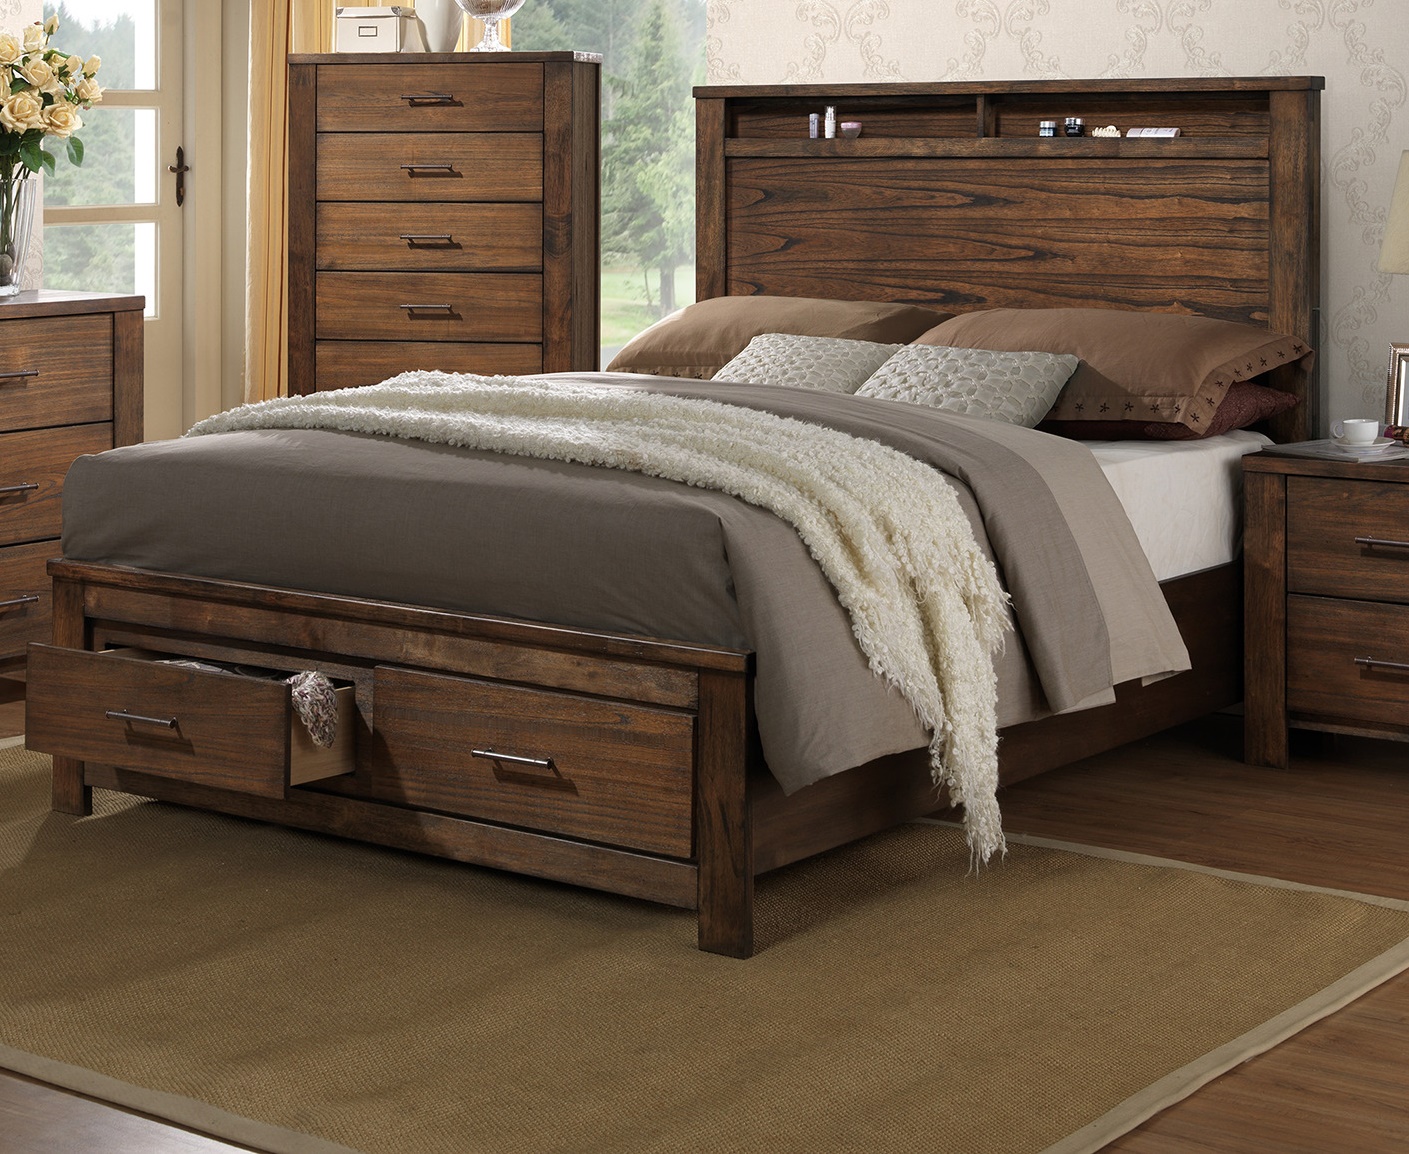 Shelf Hb Bedframe Bedroom Furniture, Sears Bed Frame With Drawers